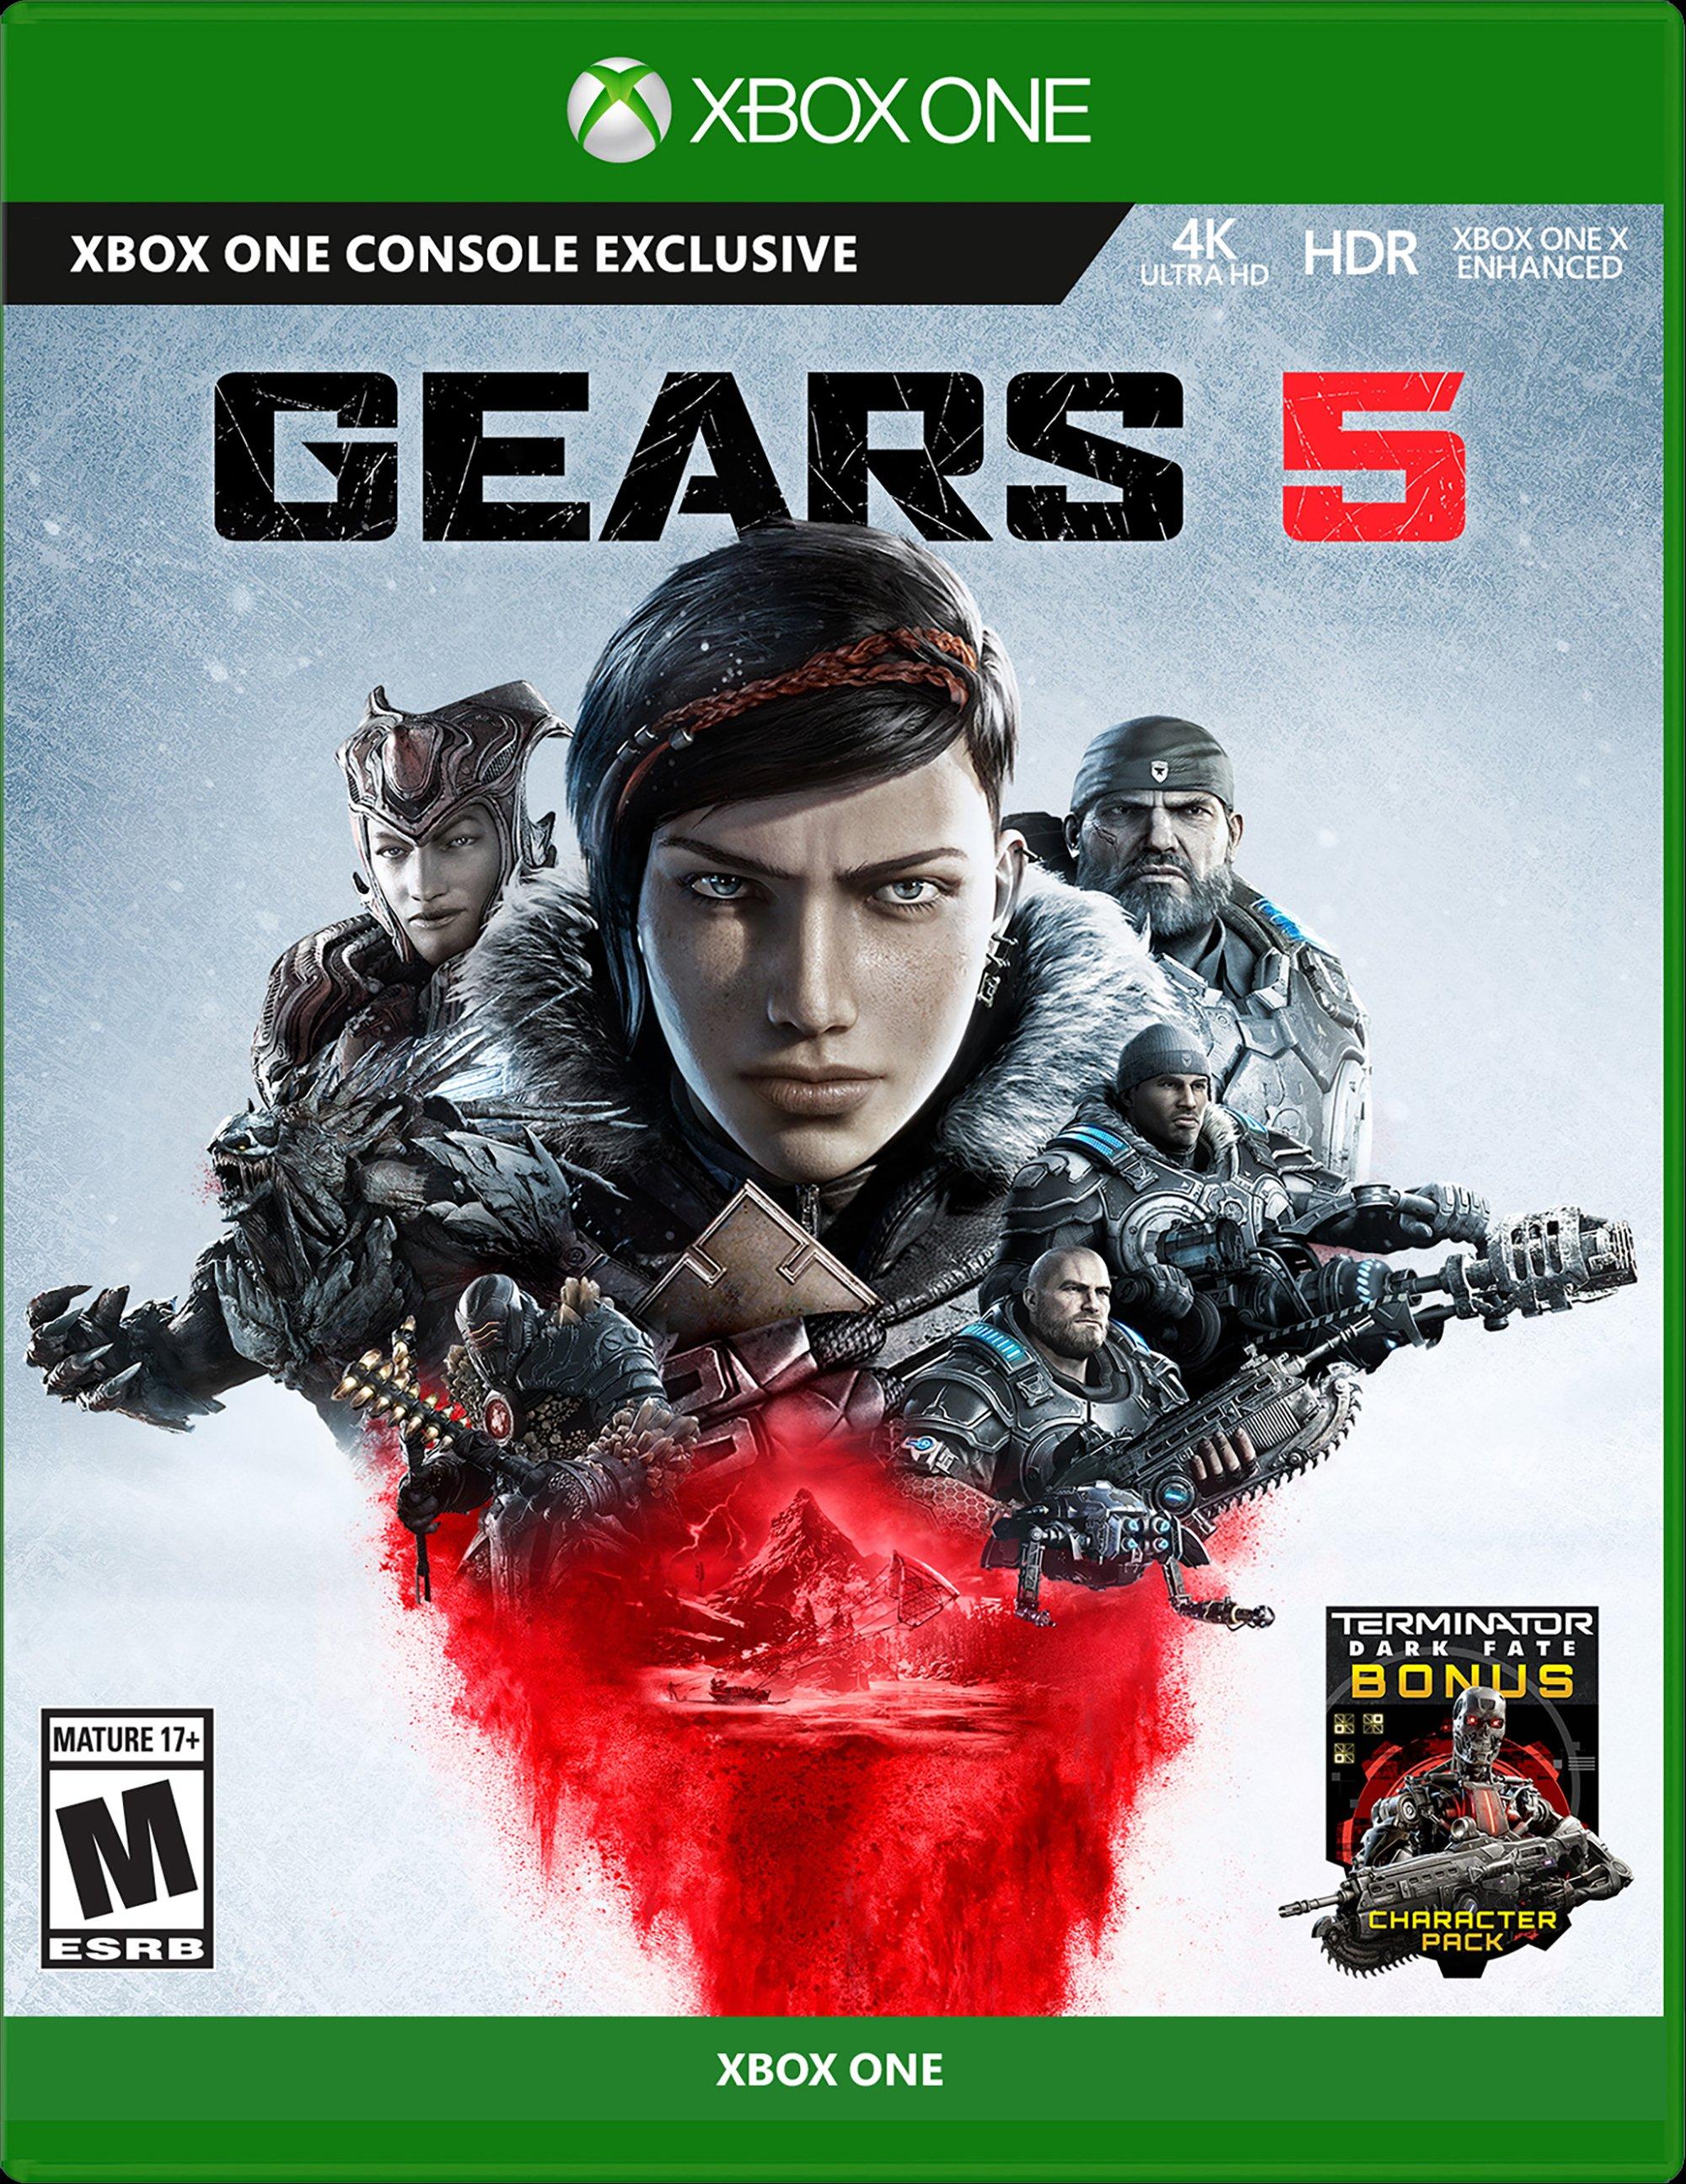 Gears 5 - Xbox One